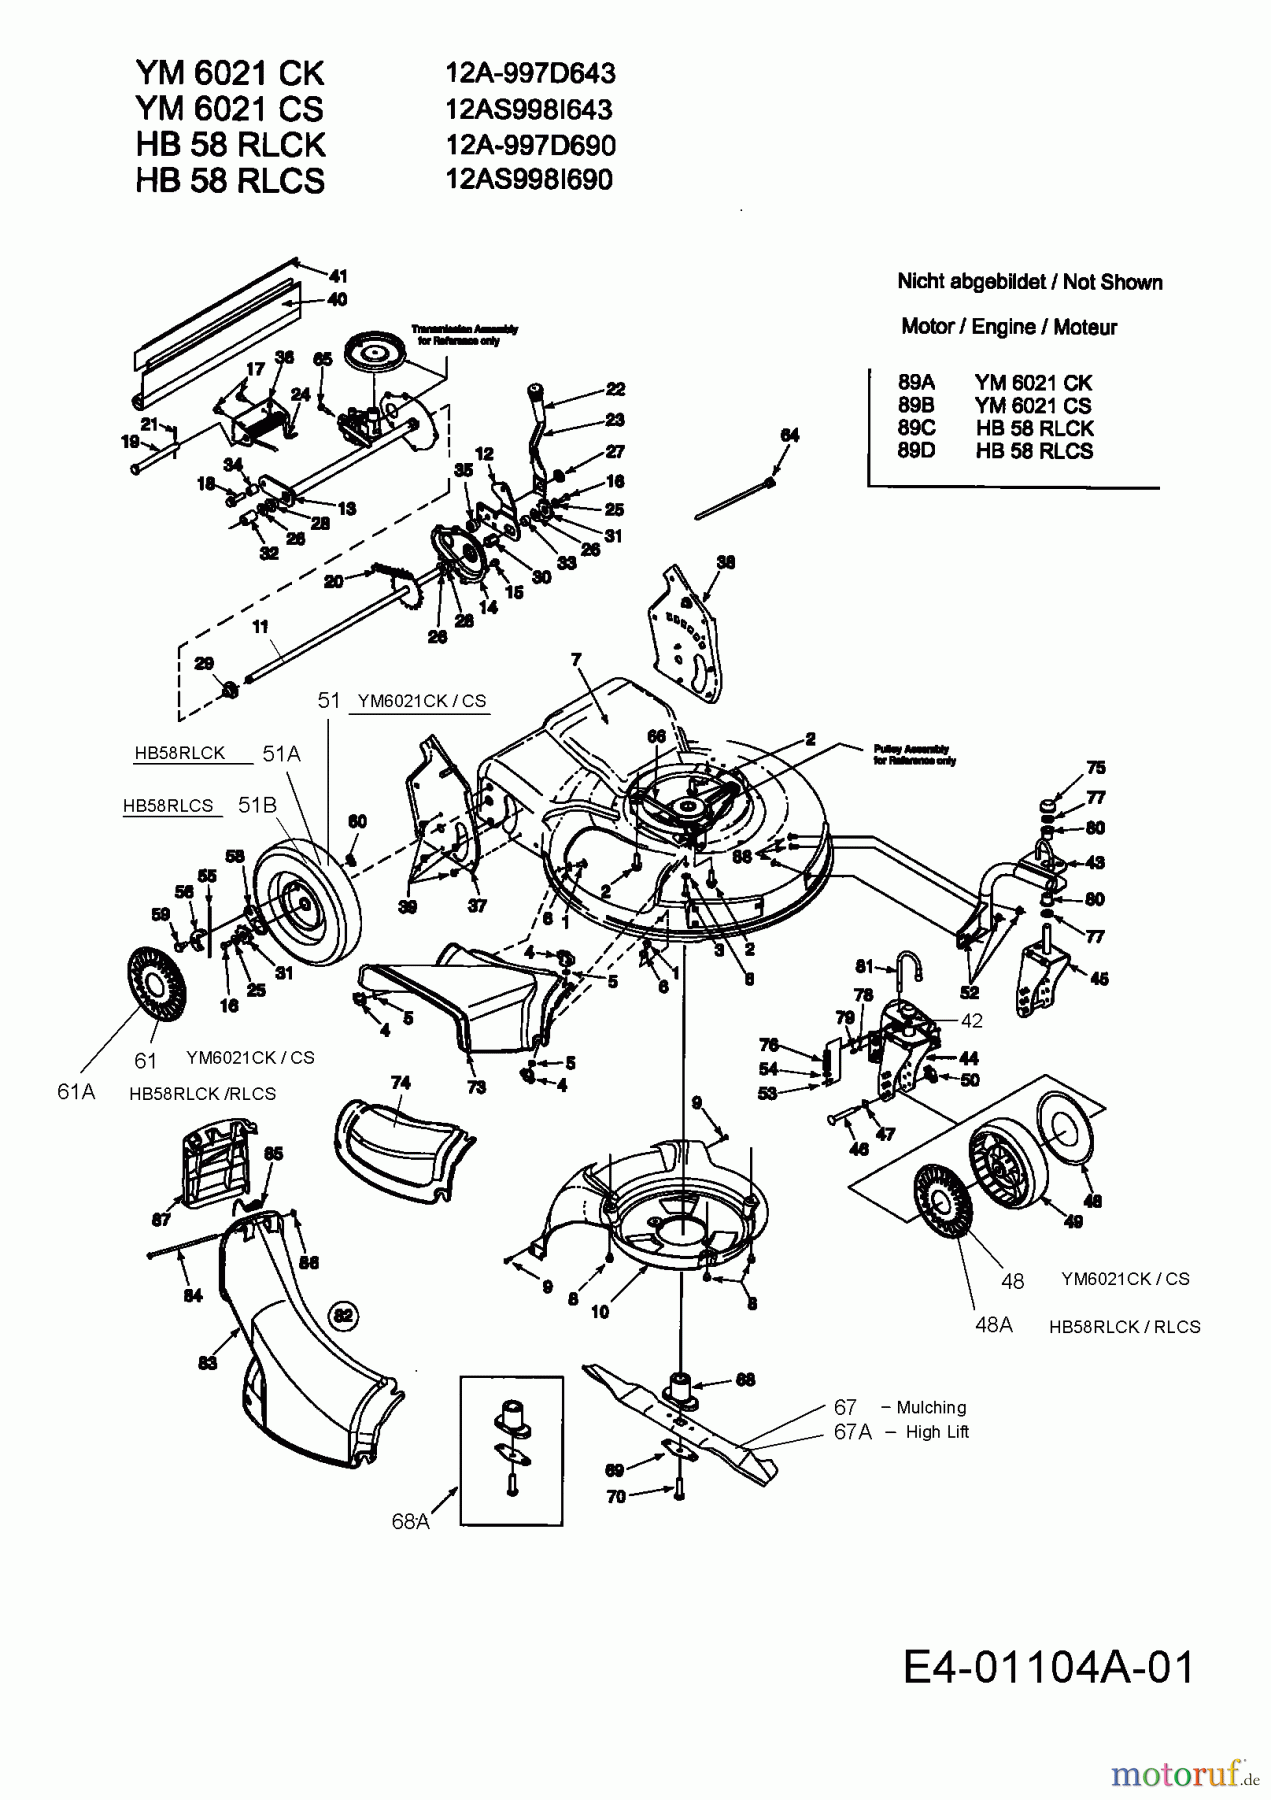  Gutbrod Petrol mower self propelled HB 58 RLCS 12AS998I690  (2003) Basic machine